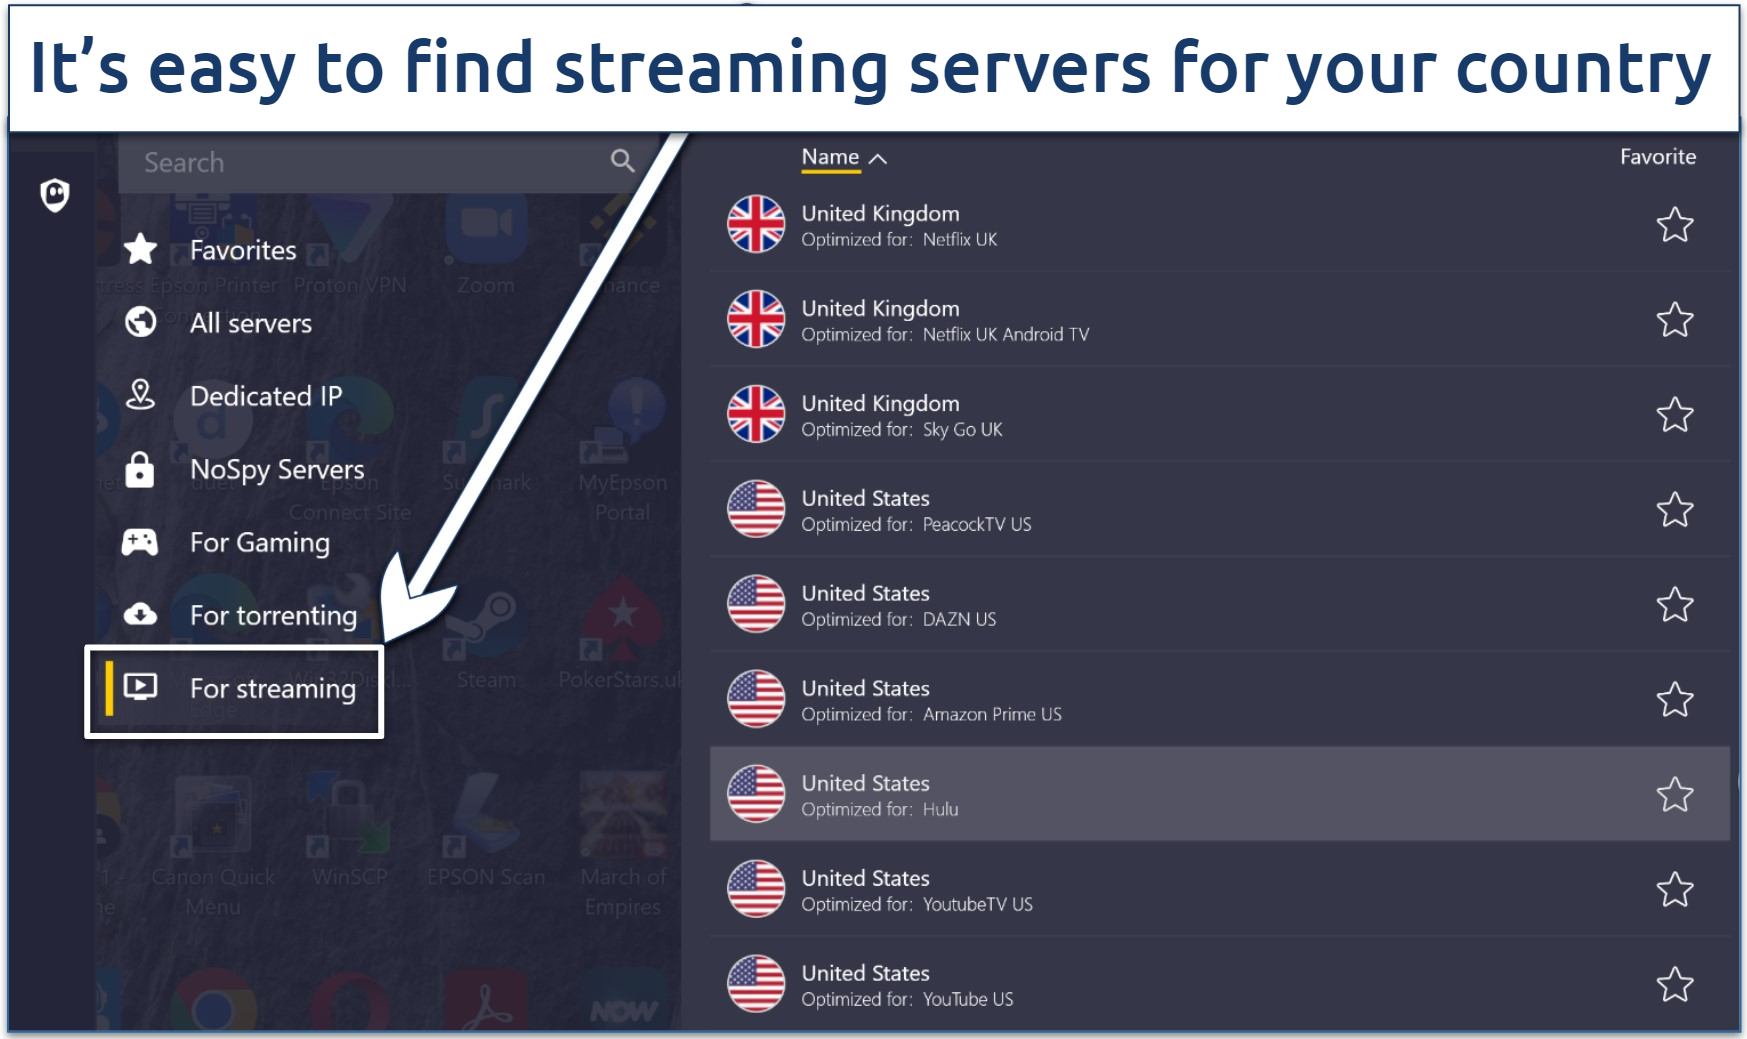 Screenshot of CyberGhost's streaming servers